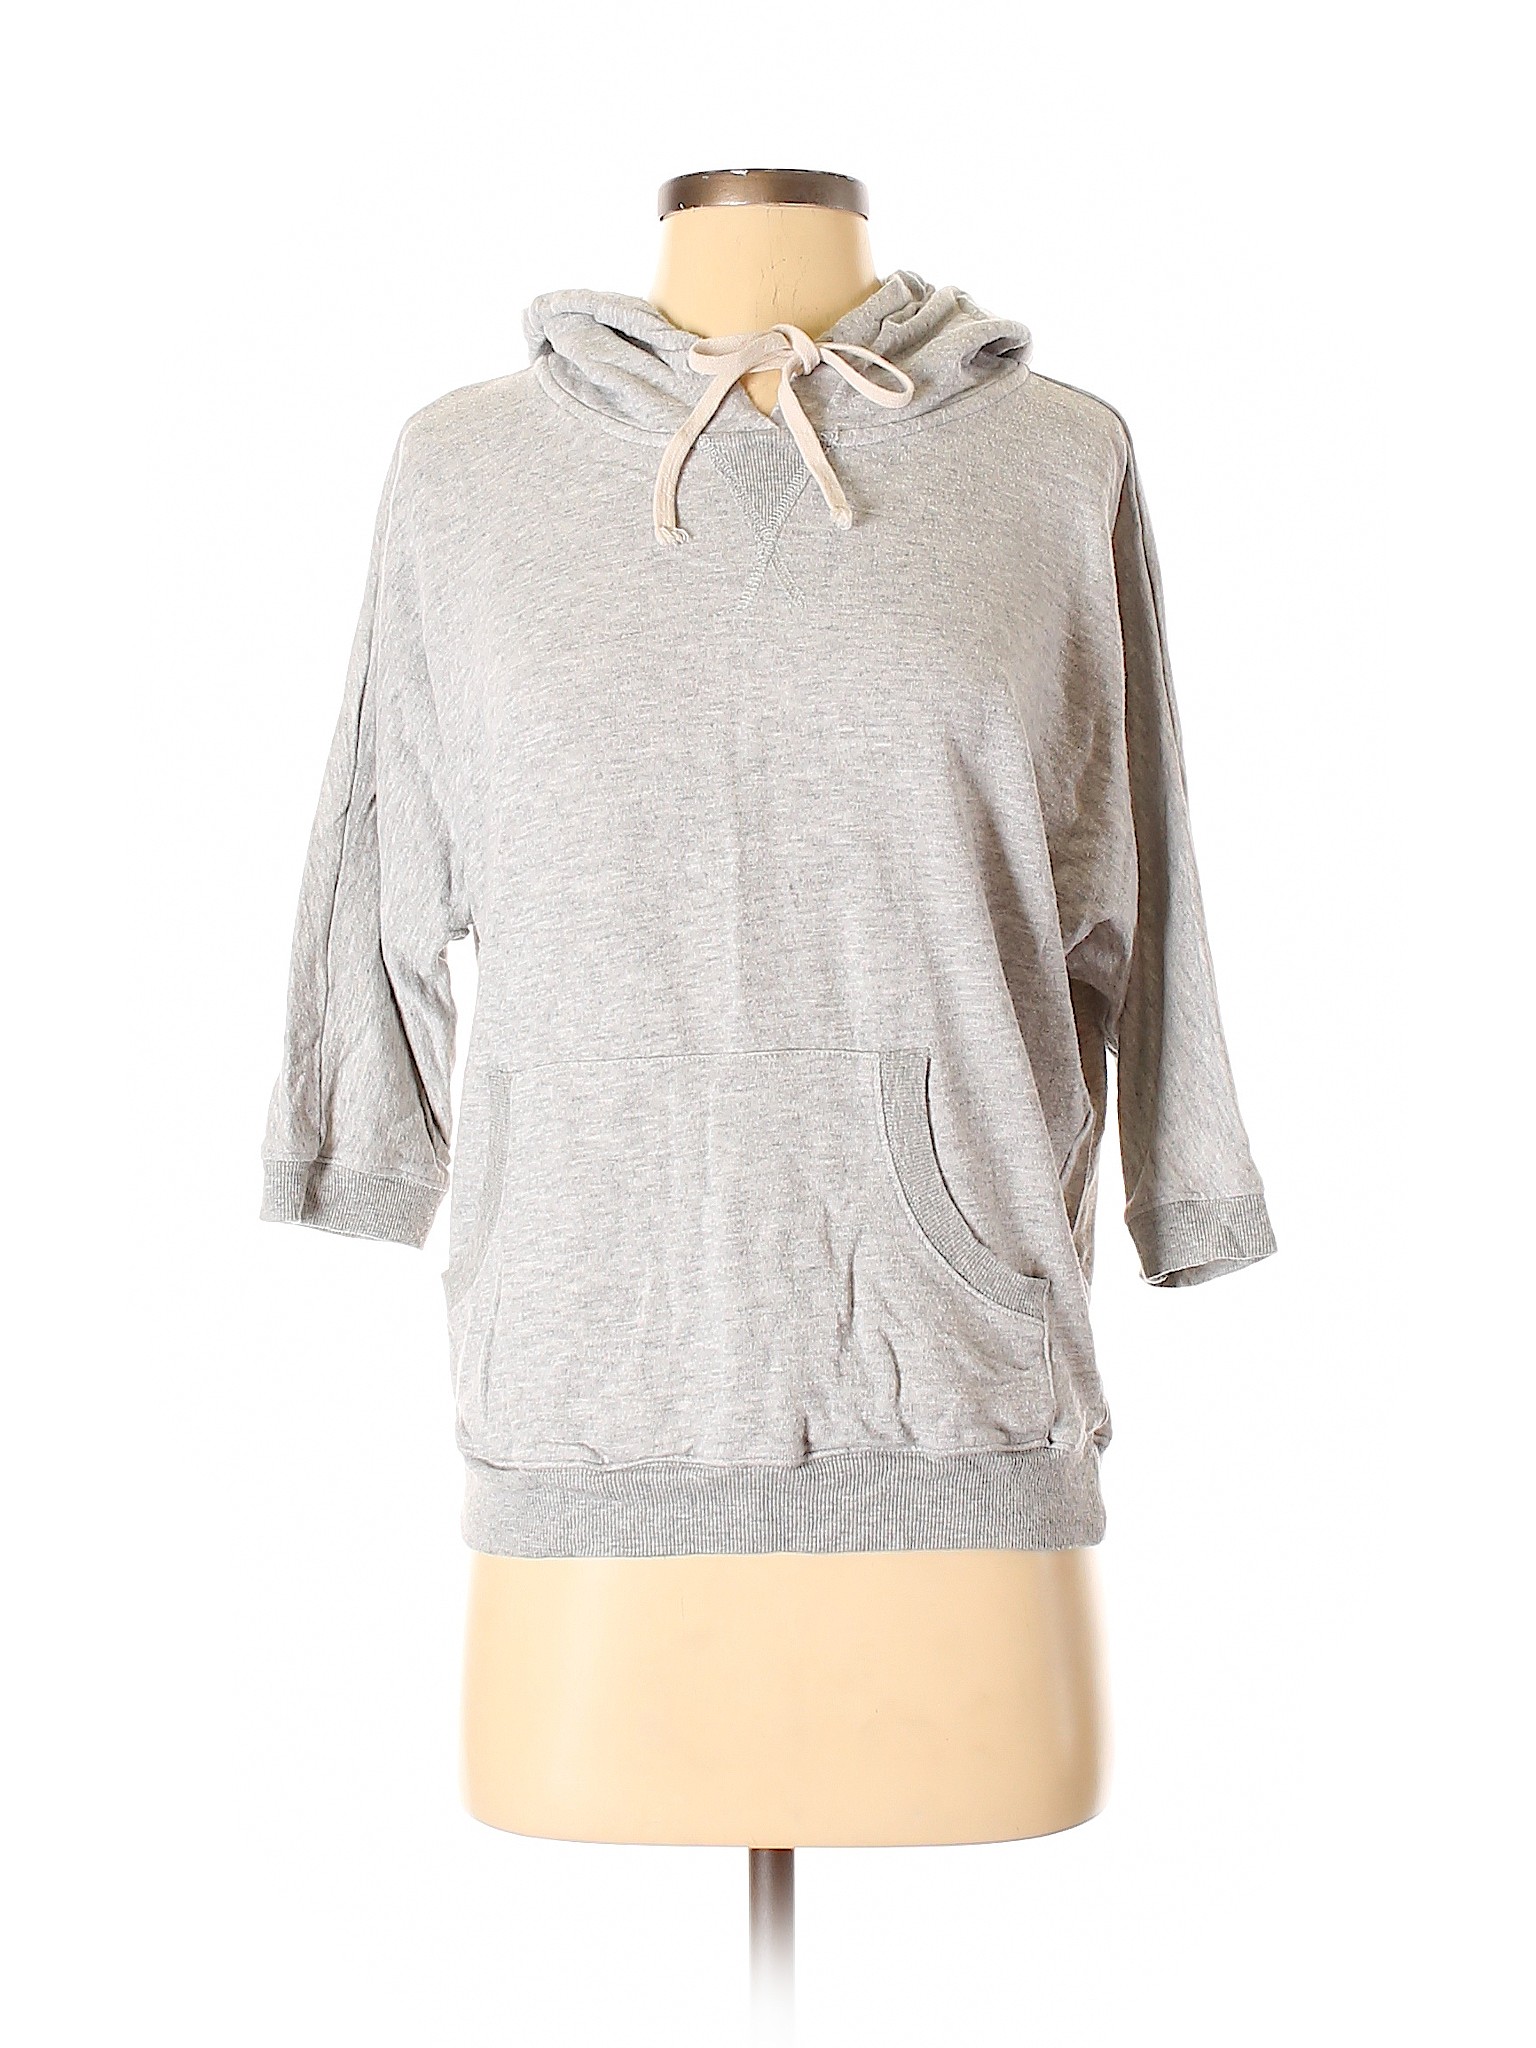 Delia's Women Gray Pullover Hoodie S | eBay